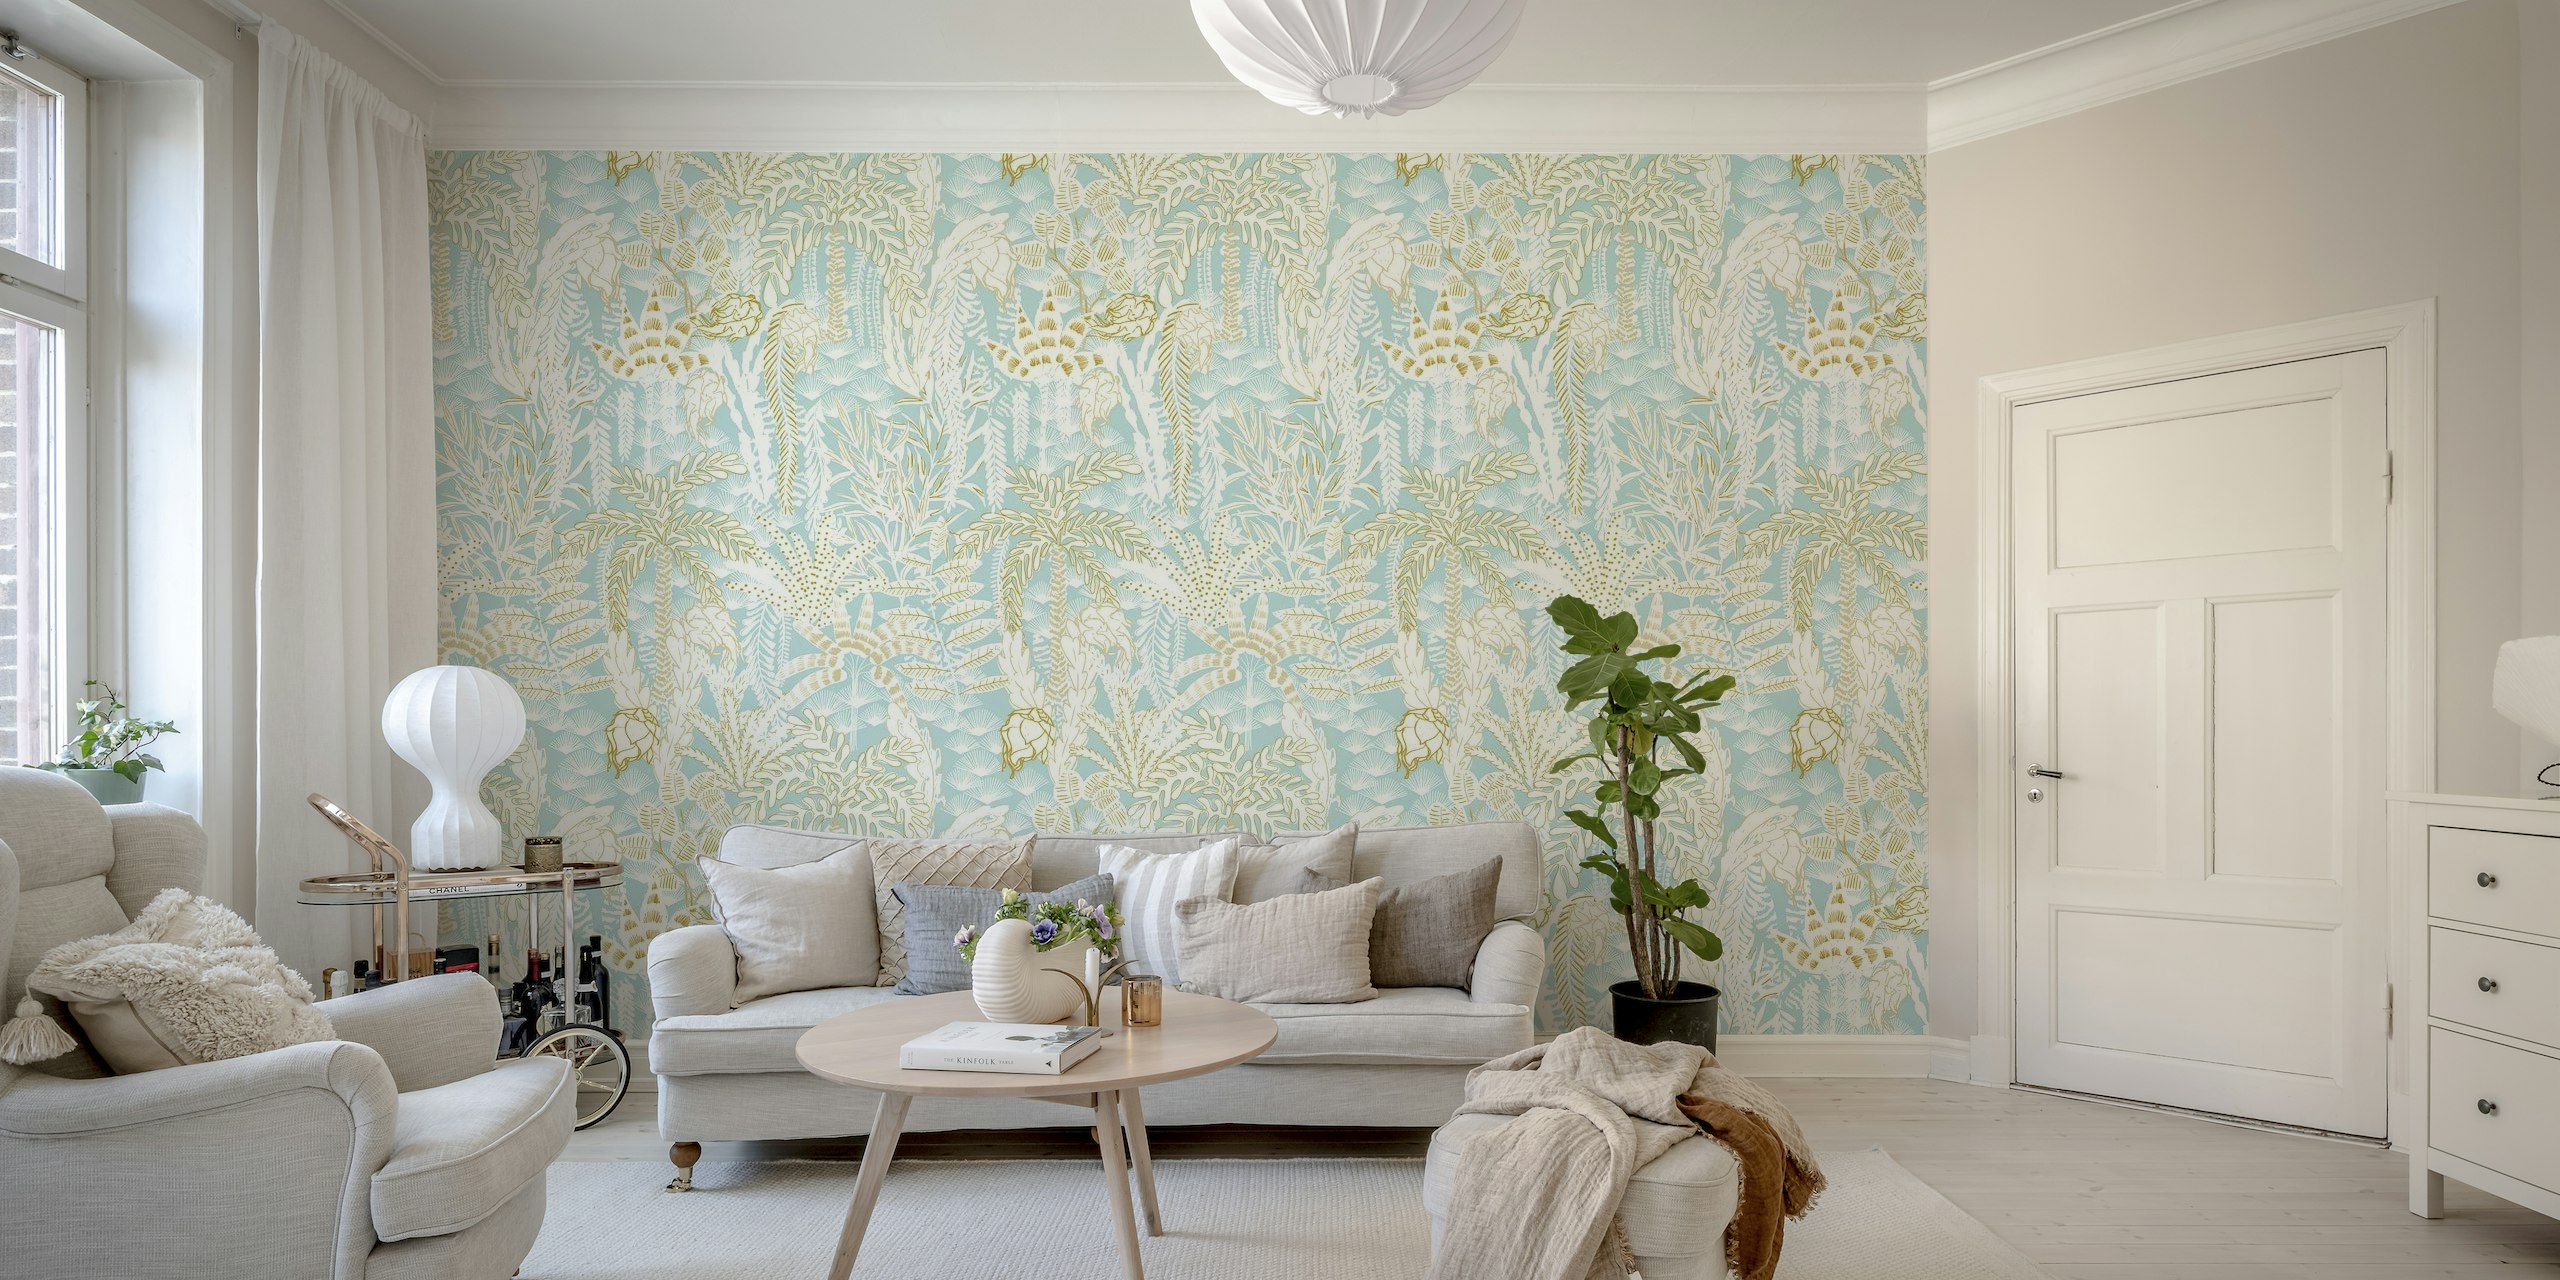 Tropical lounge warm white and aqua papel pintado